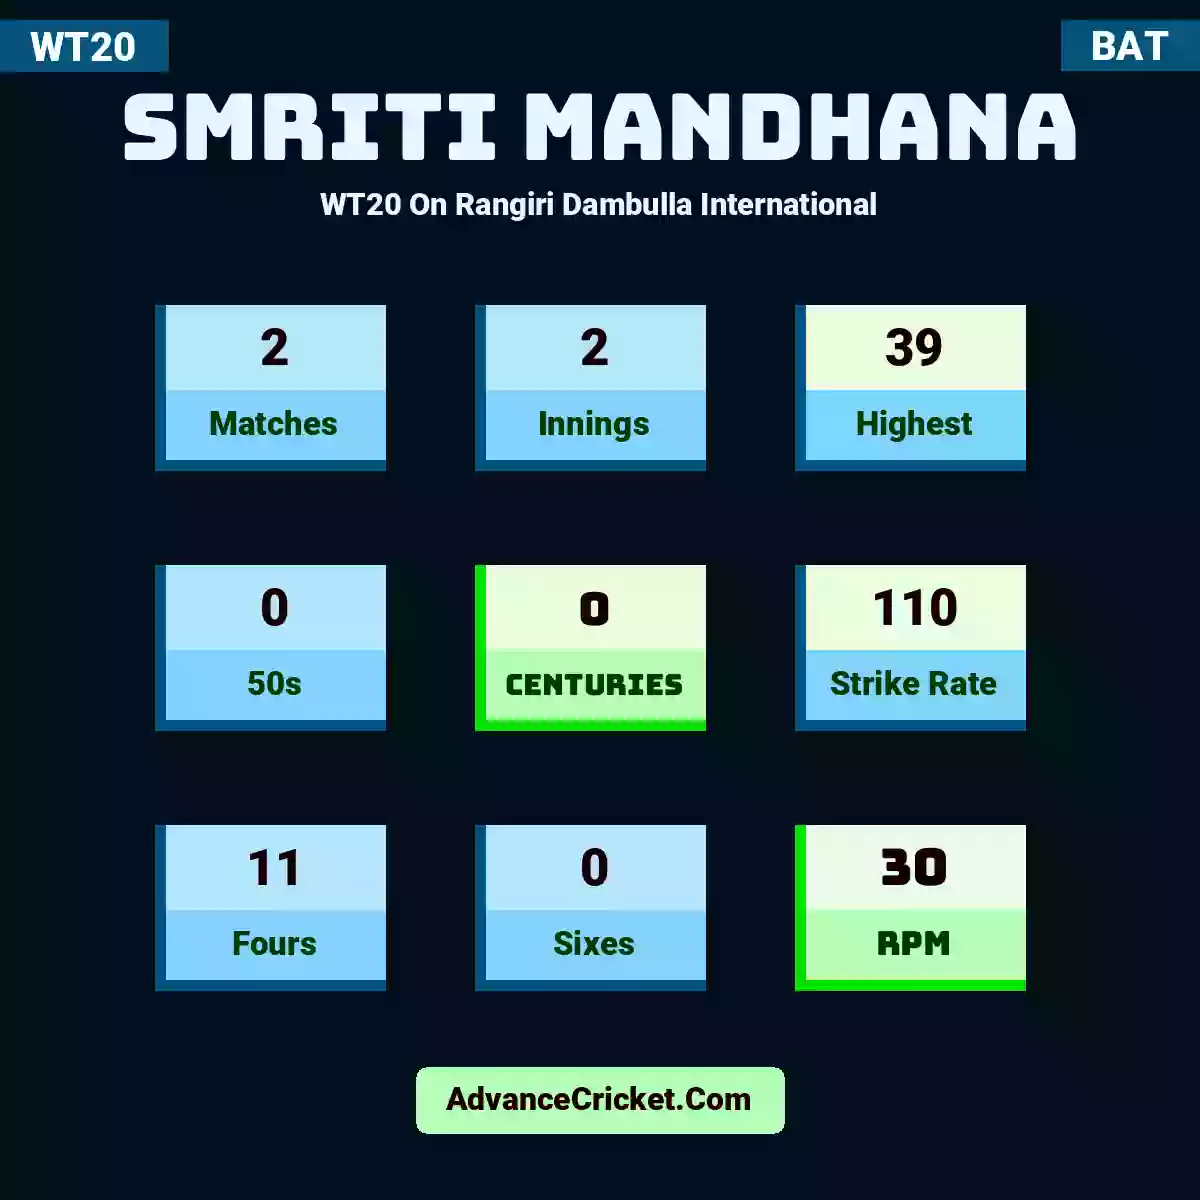 Smriti Mandhana WT20  On Rangiri Dambulla International, Smriti Mandhana played 2 matches, scored 39 runs as highest, 0 half-centuries, and 0 centuries, with a strike rate of 110. S.Mandhana hit 11 fours and 0 sixes, with an RPM of 30.